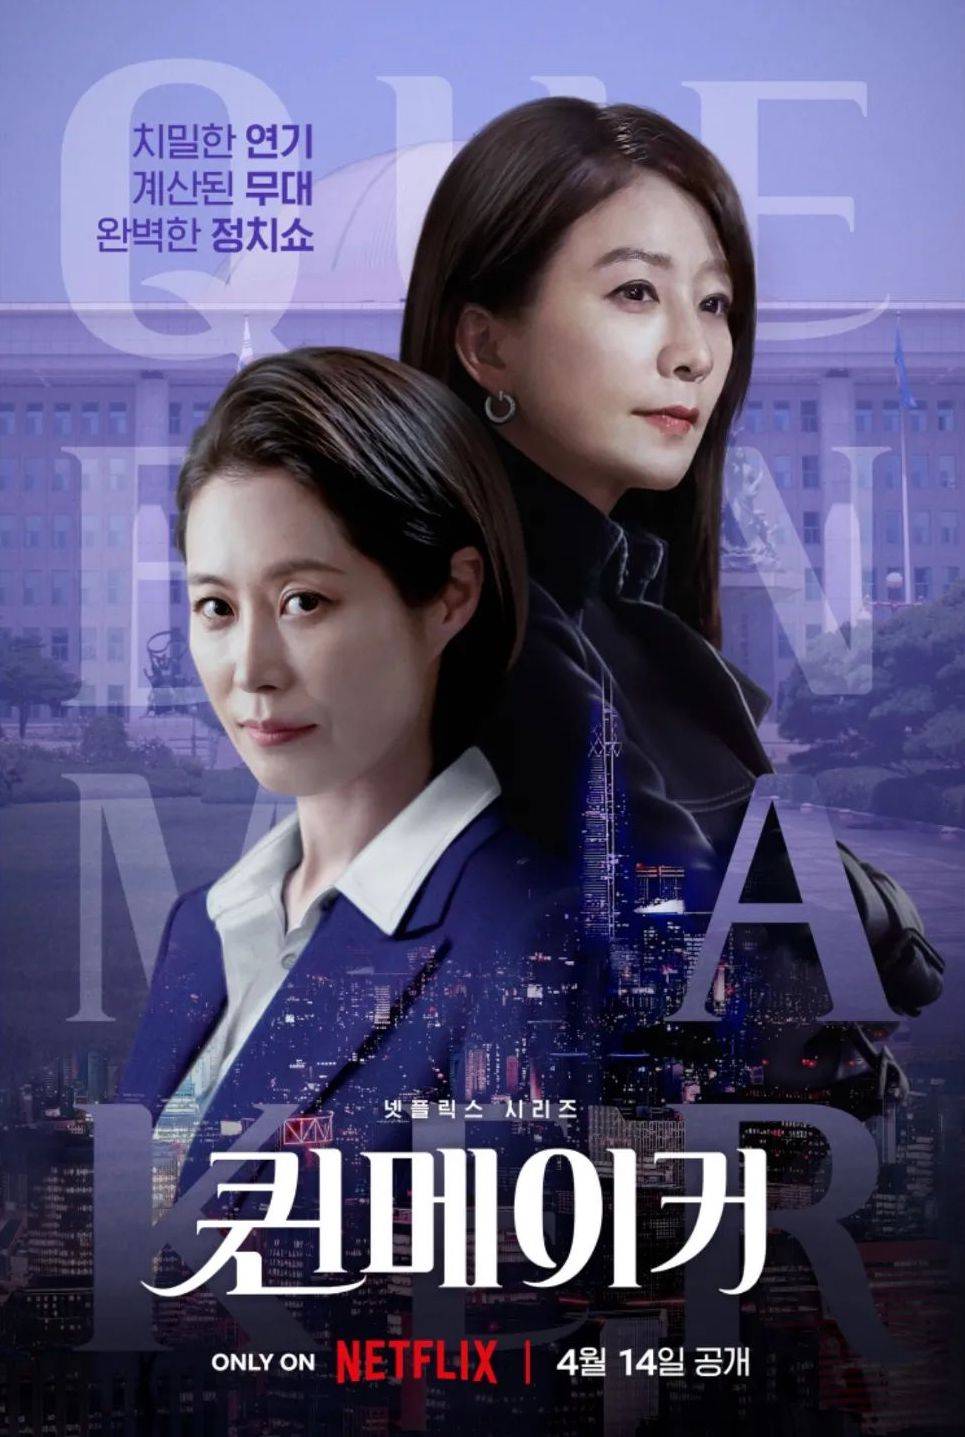 TV ratings for Queenmaker (퀸 메이커) in South Korea. Netflix TV series